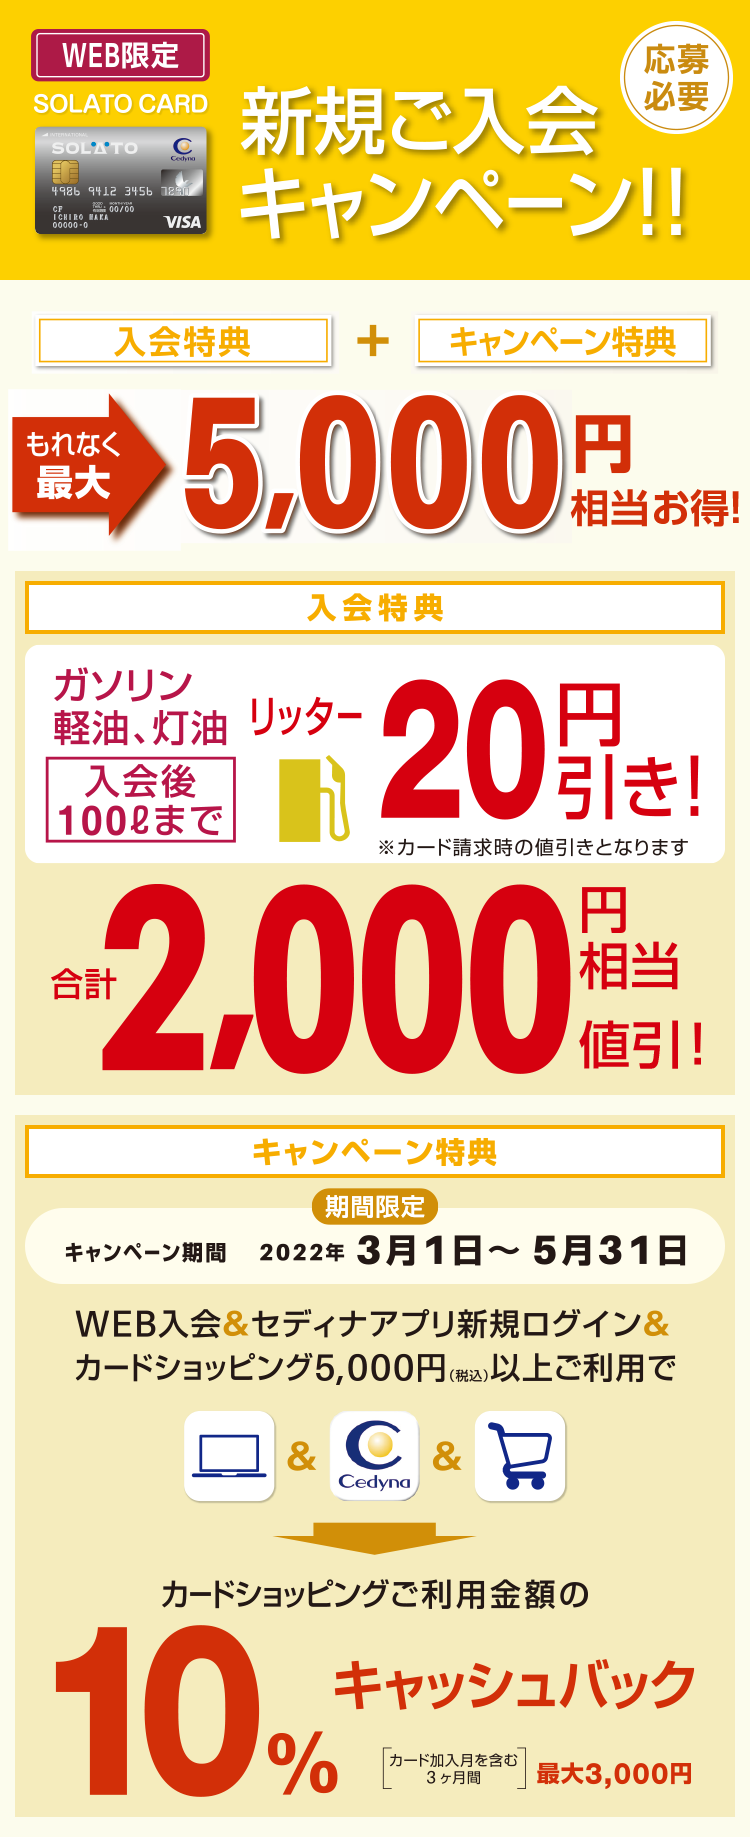 【SOLATO CARD】 WEB限定新規ご入会キャンペーン